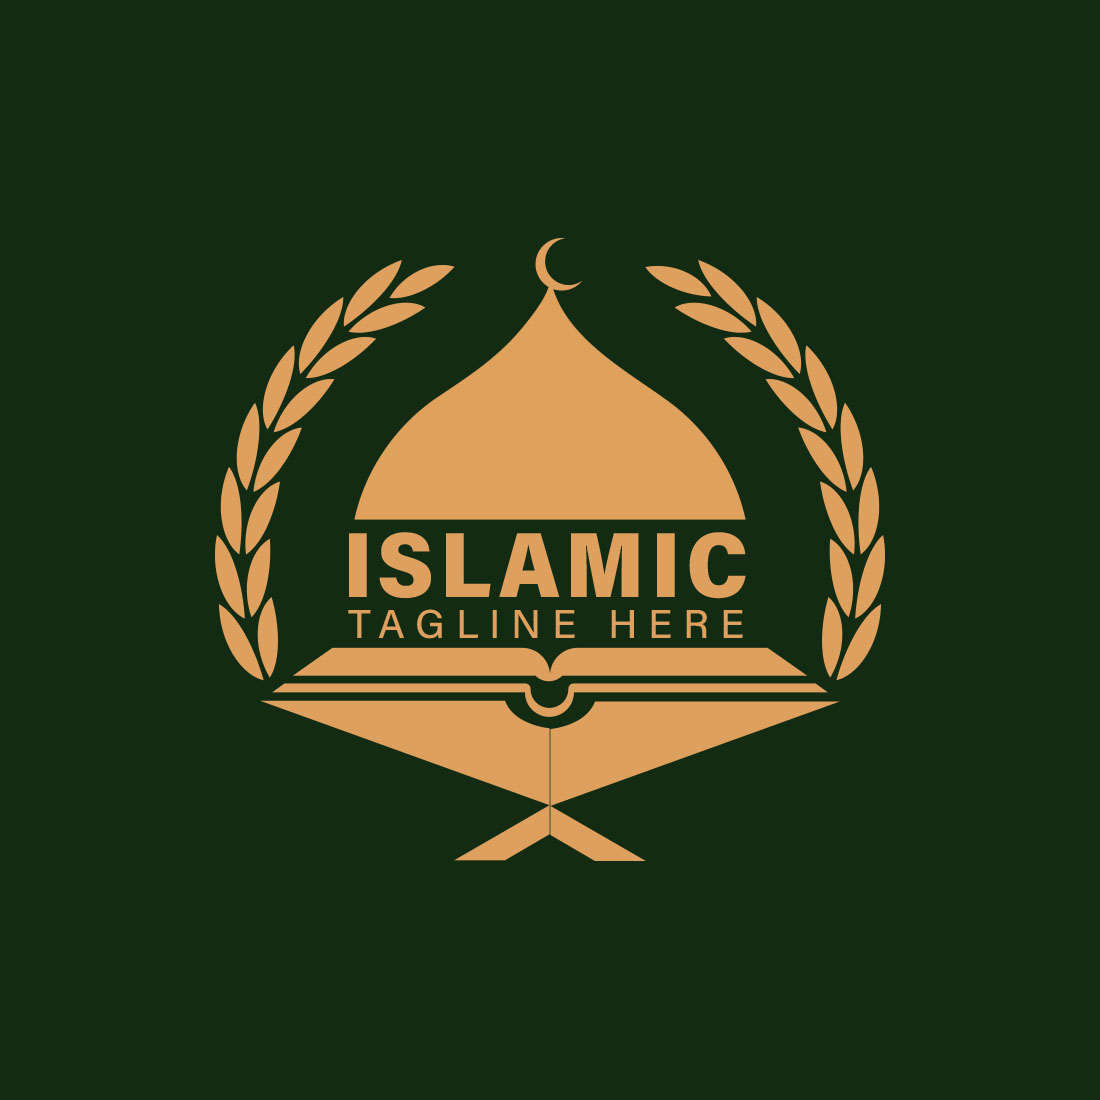 Islamic Logo Template Designs cover image.